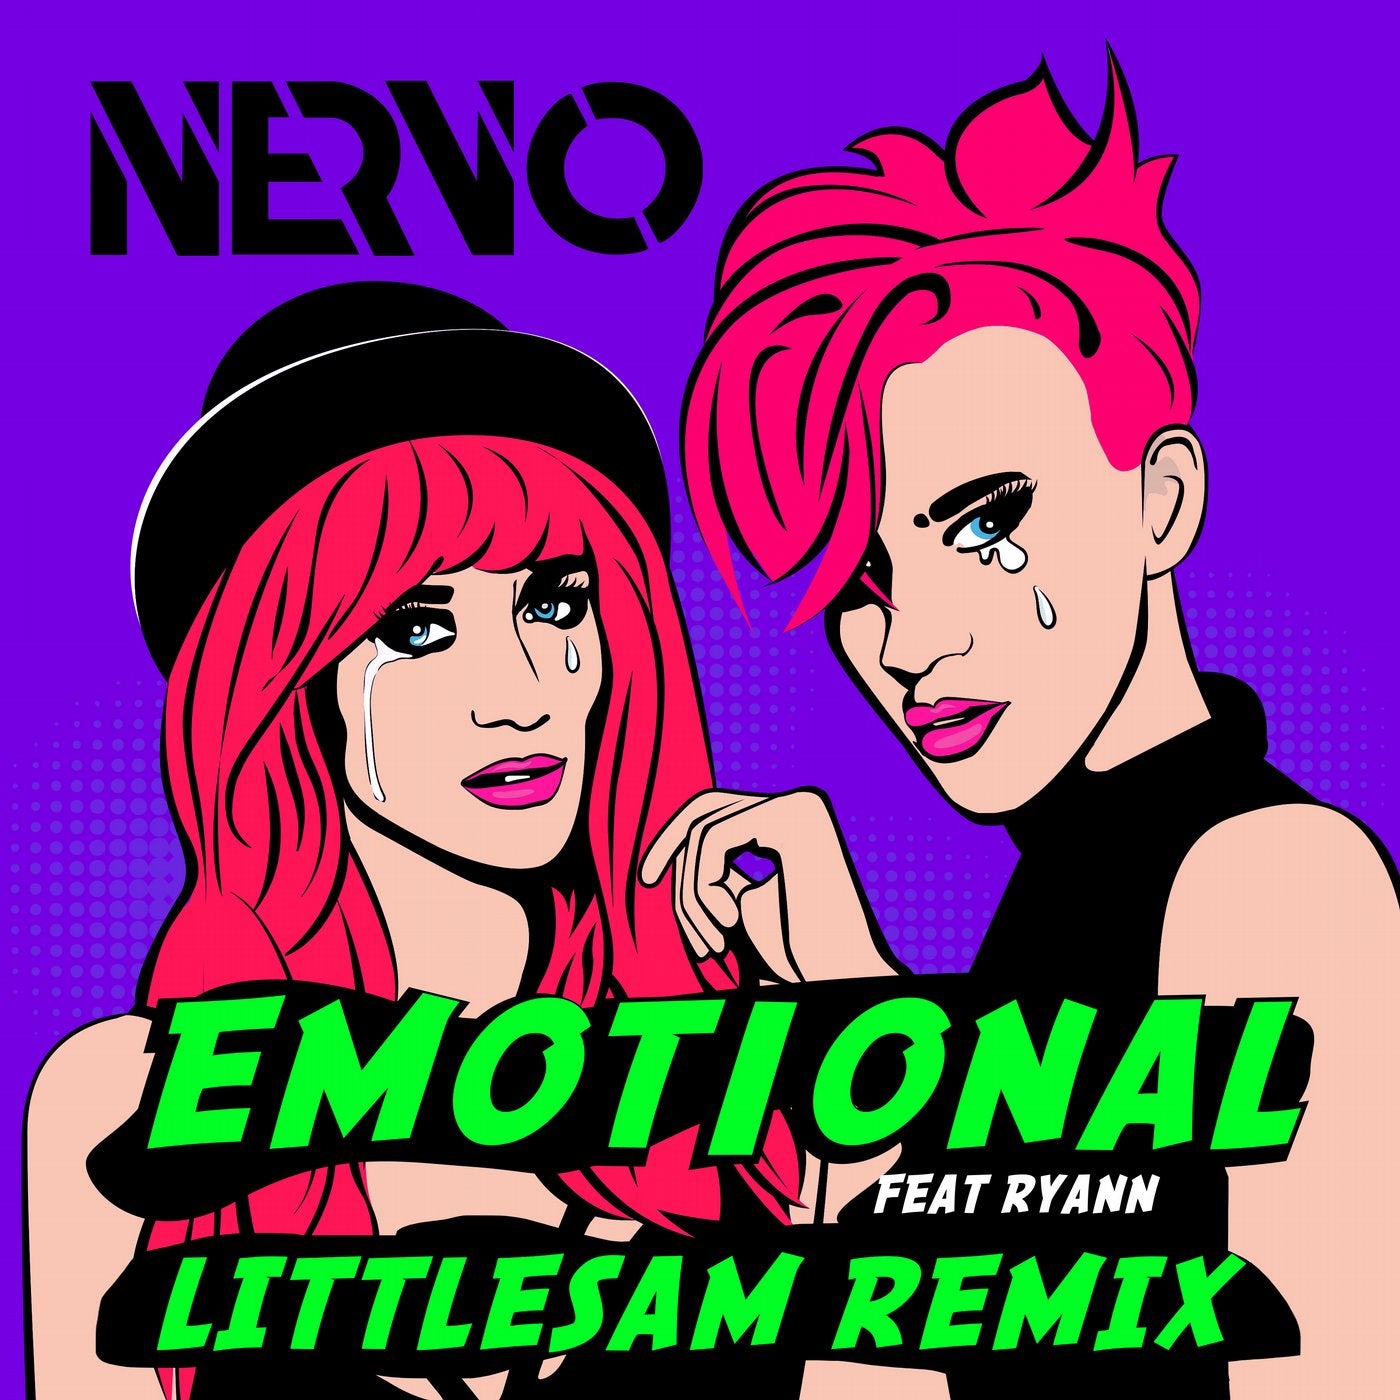 Emotional - Littlesam Remix